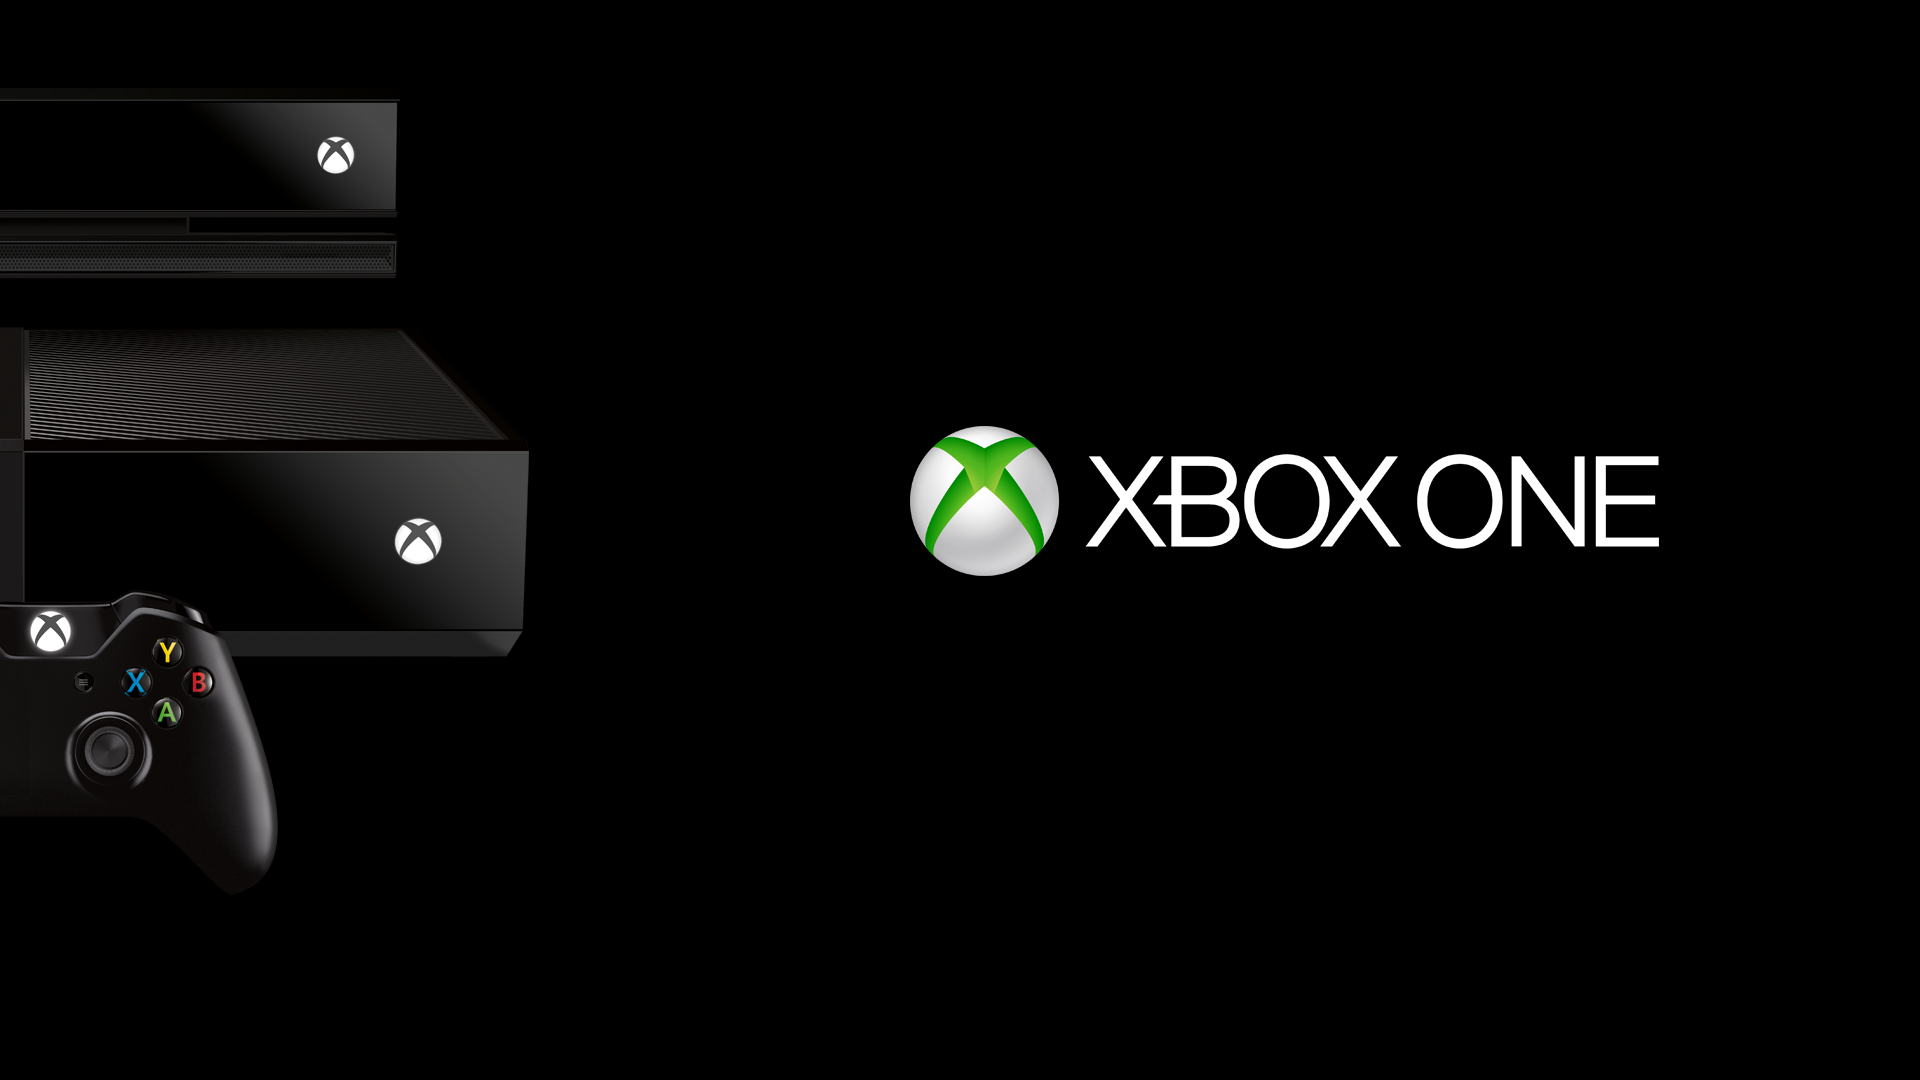 Fondos de Xbox One Wallpapers HD e imagenes de Xbox One Gratis   xbox